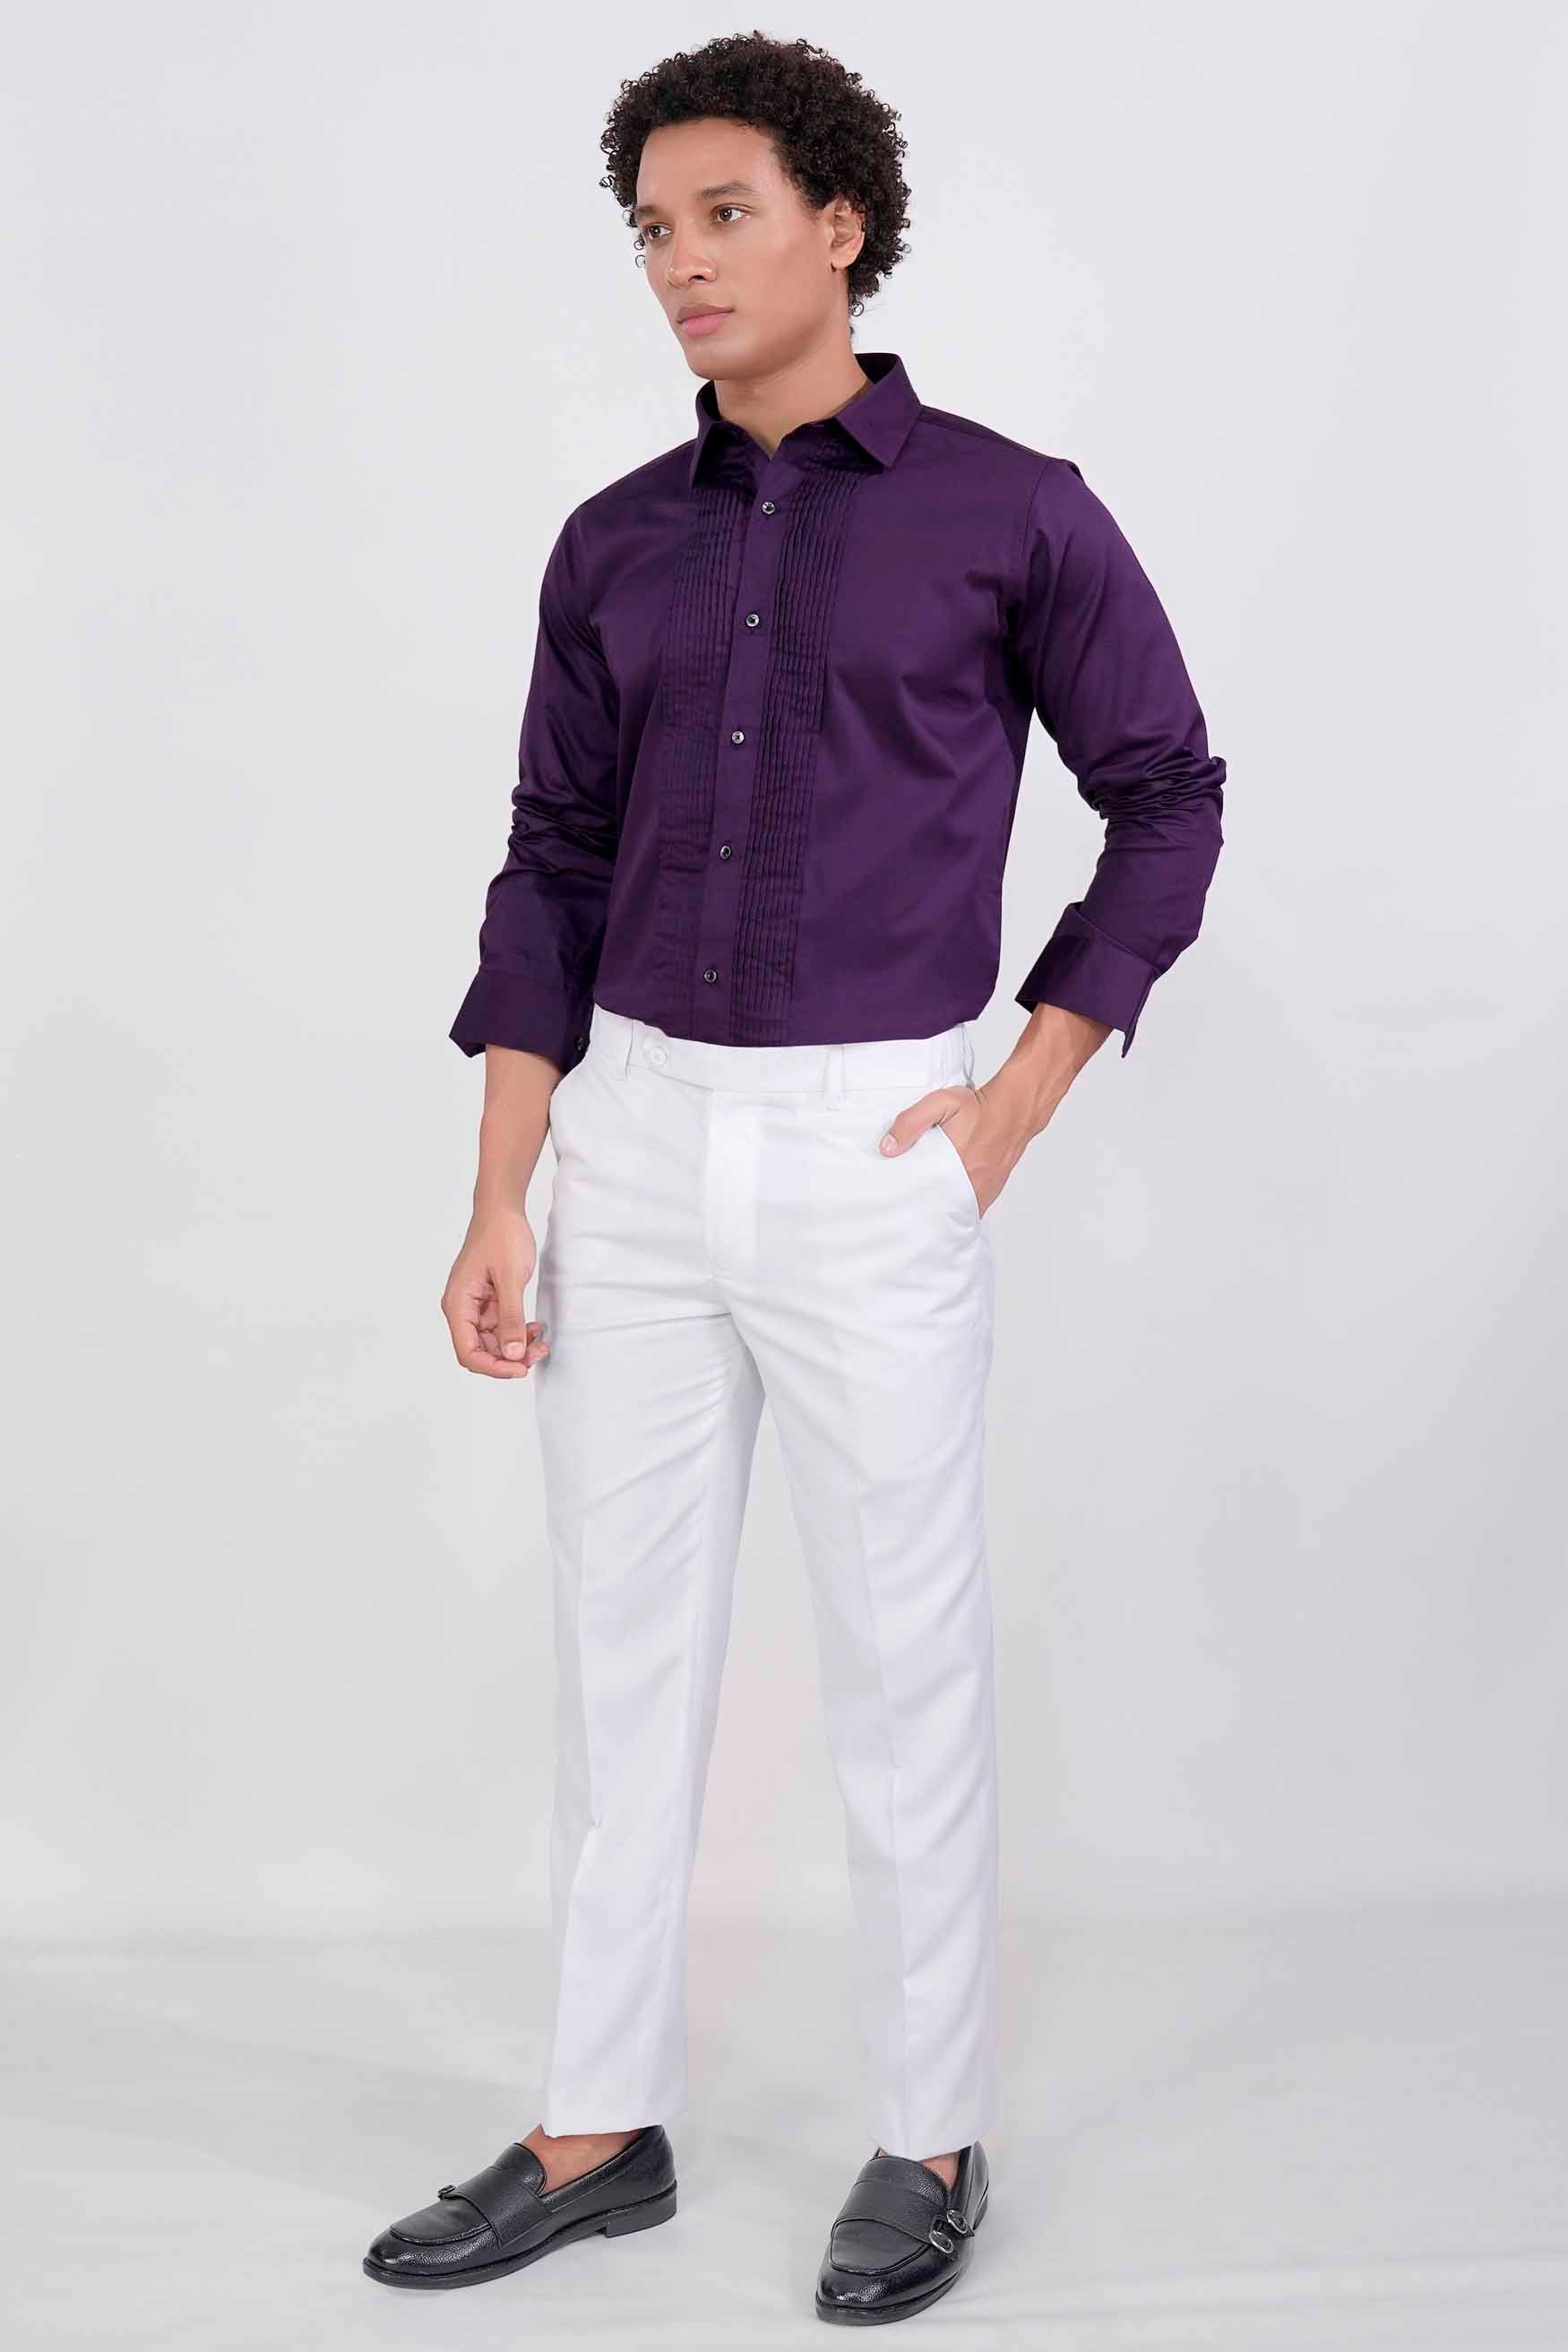 Thunder Purple Subtle Sheen Super Soft Premium Cotton Tuxedo Shirt